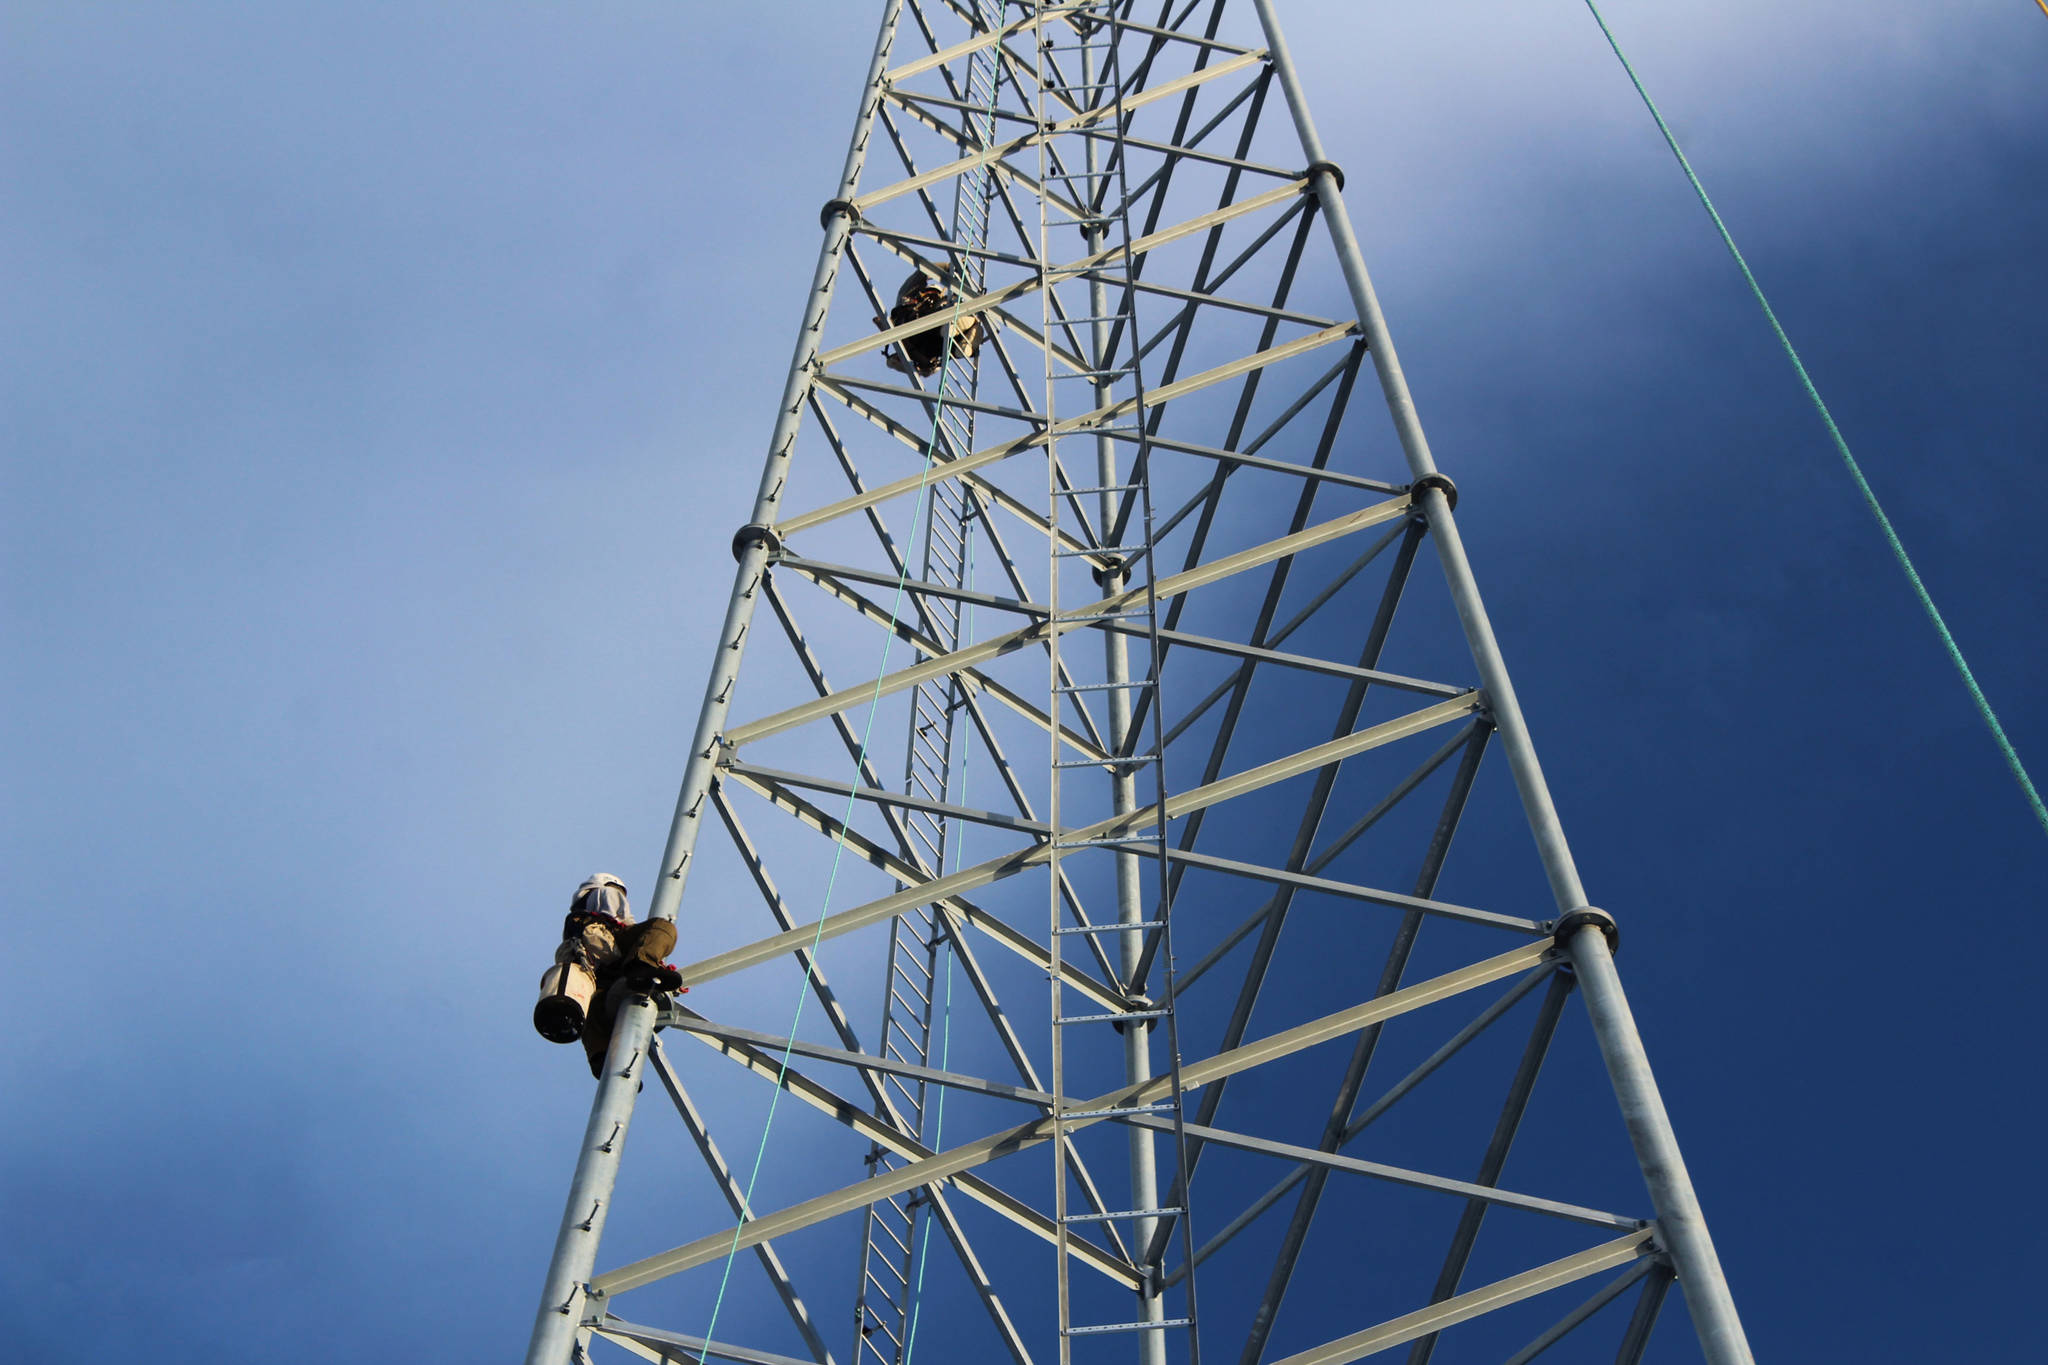 Billy Adamson (left) and Adam Kiffmeyer (right) scale a communications tower on Thursday, Jan. 7 in Nikiski, Alaska. (Ashlyn O’Hara/Peninsula Clarion)